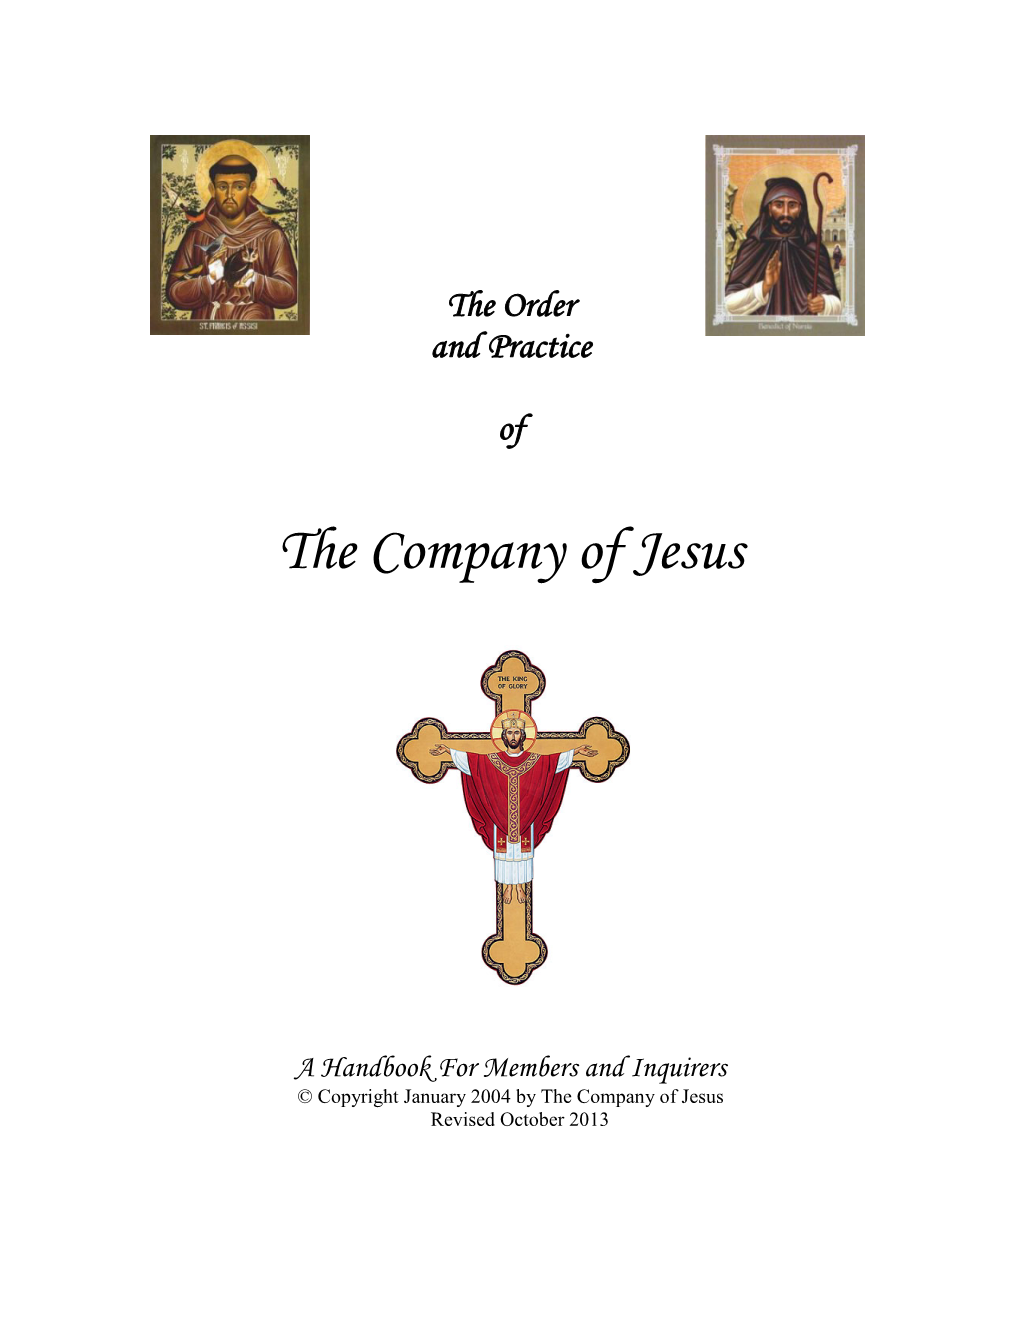 The Company of Jesus